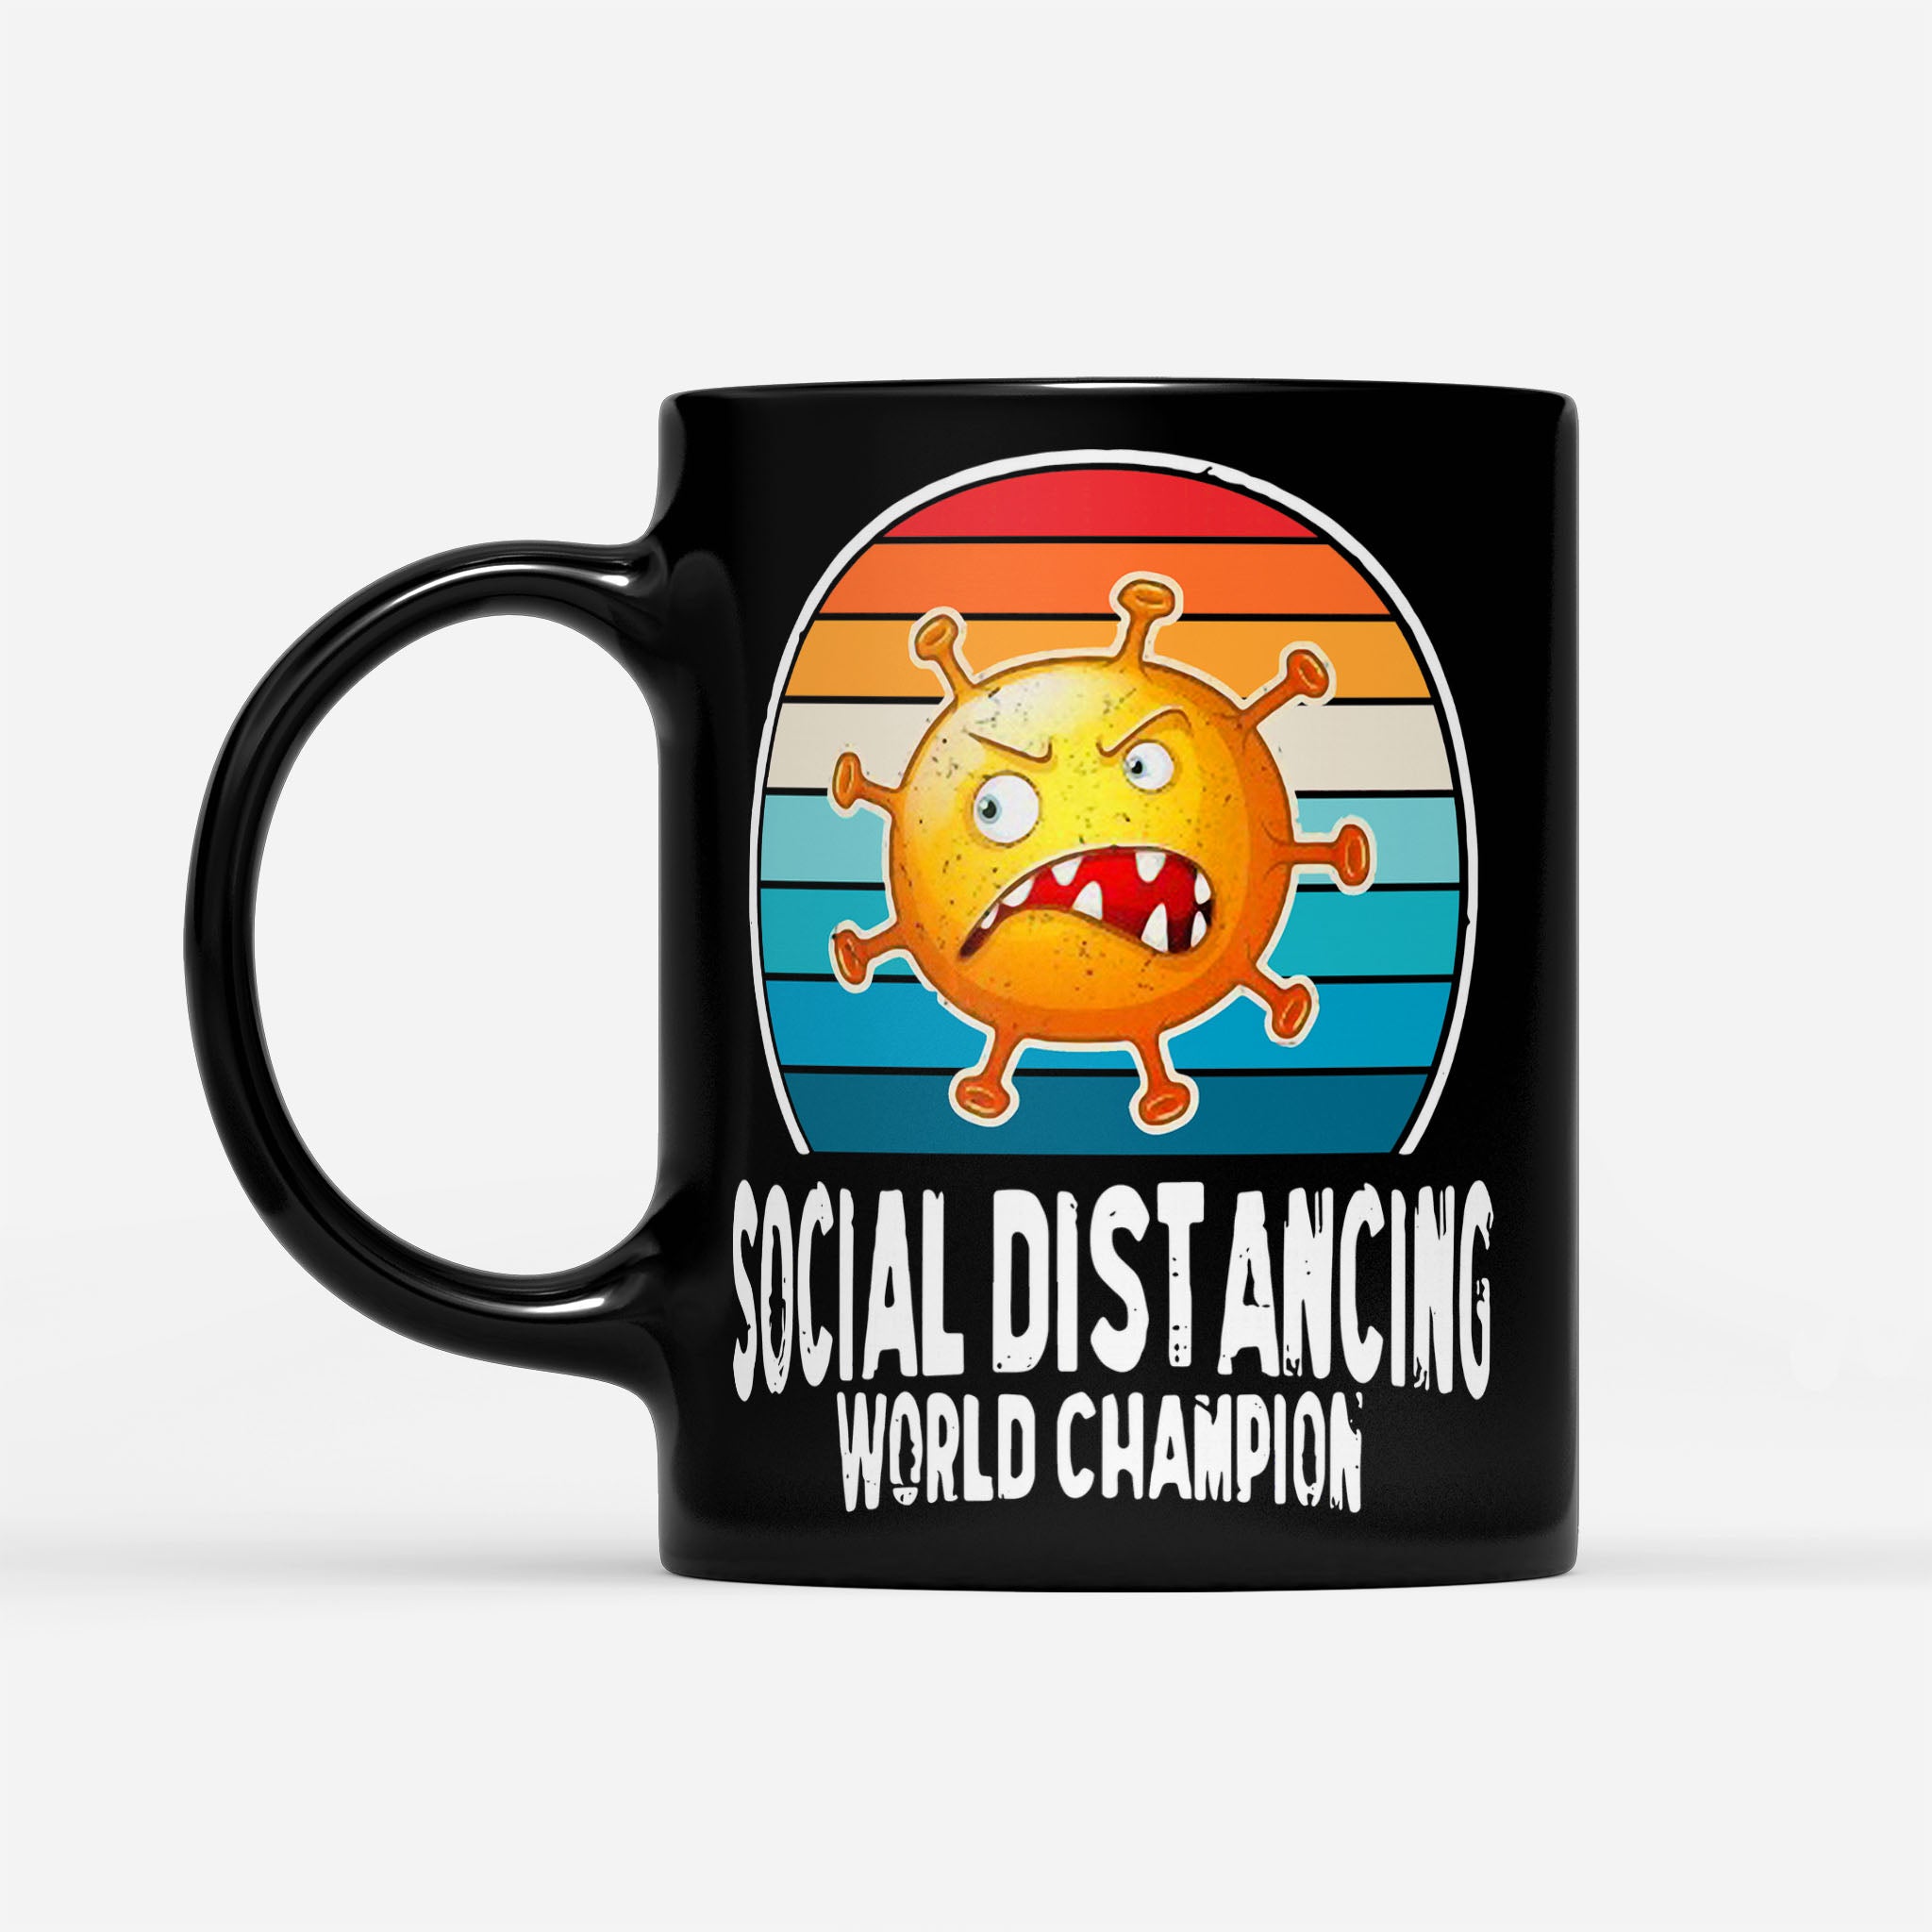 Social Distancing World Champion - Black Mug